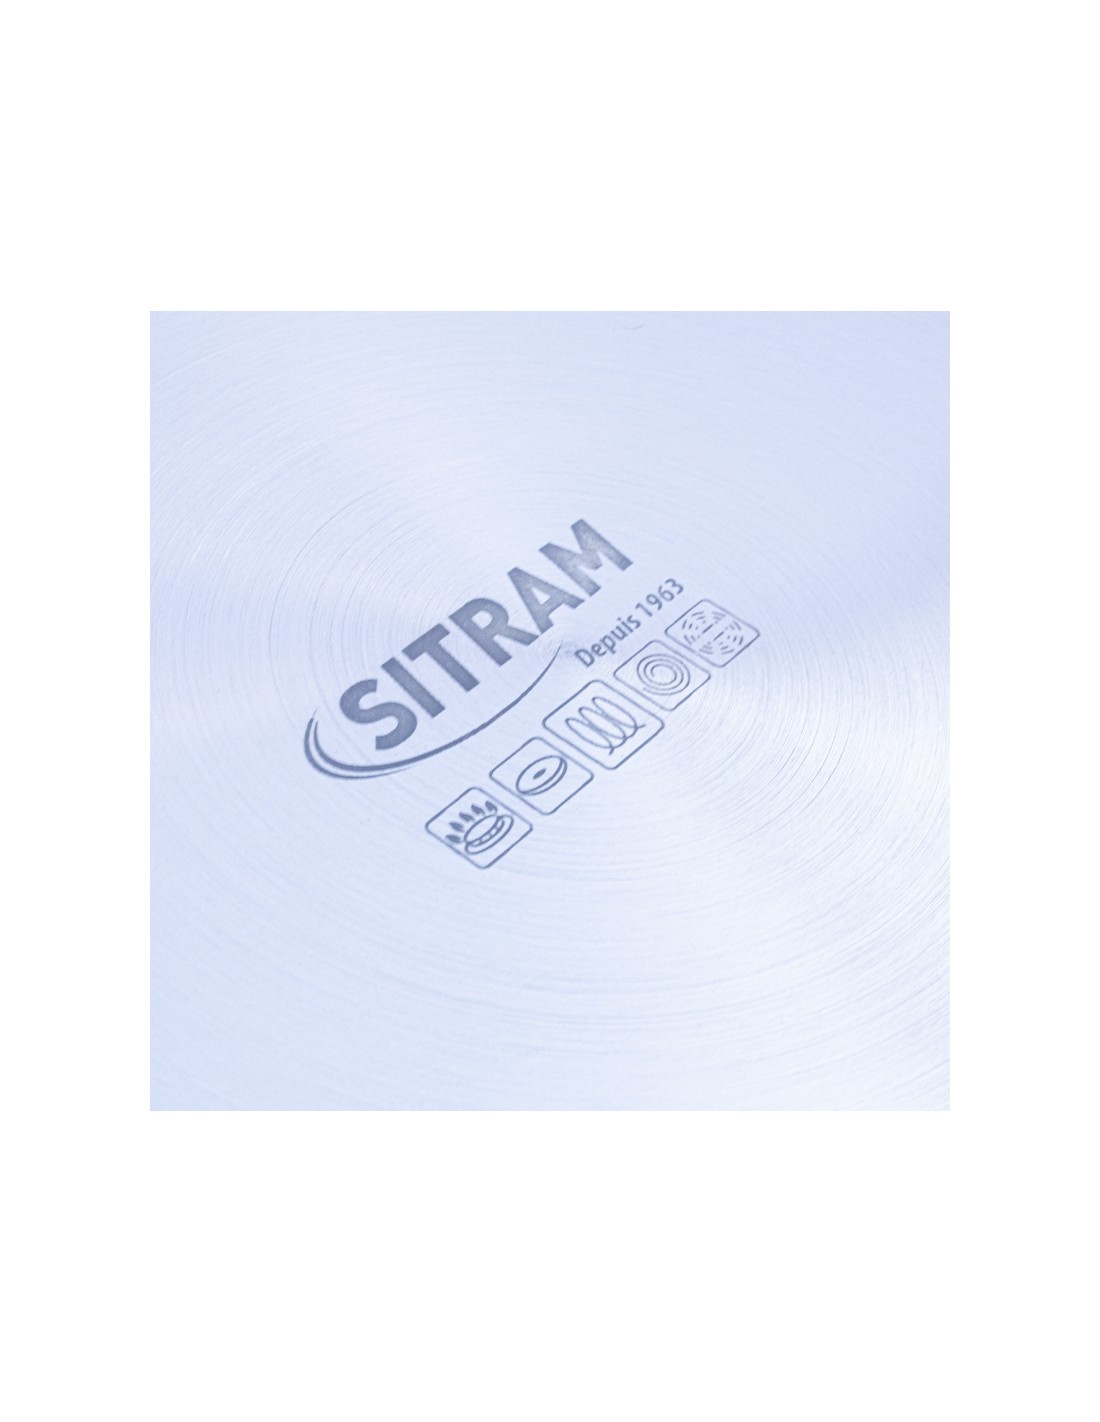 SITRAM gamme Cumin  Site officiel SITRAM